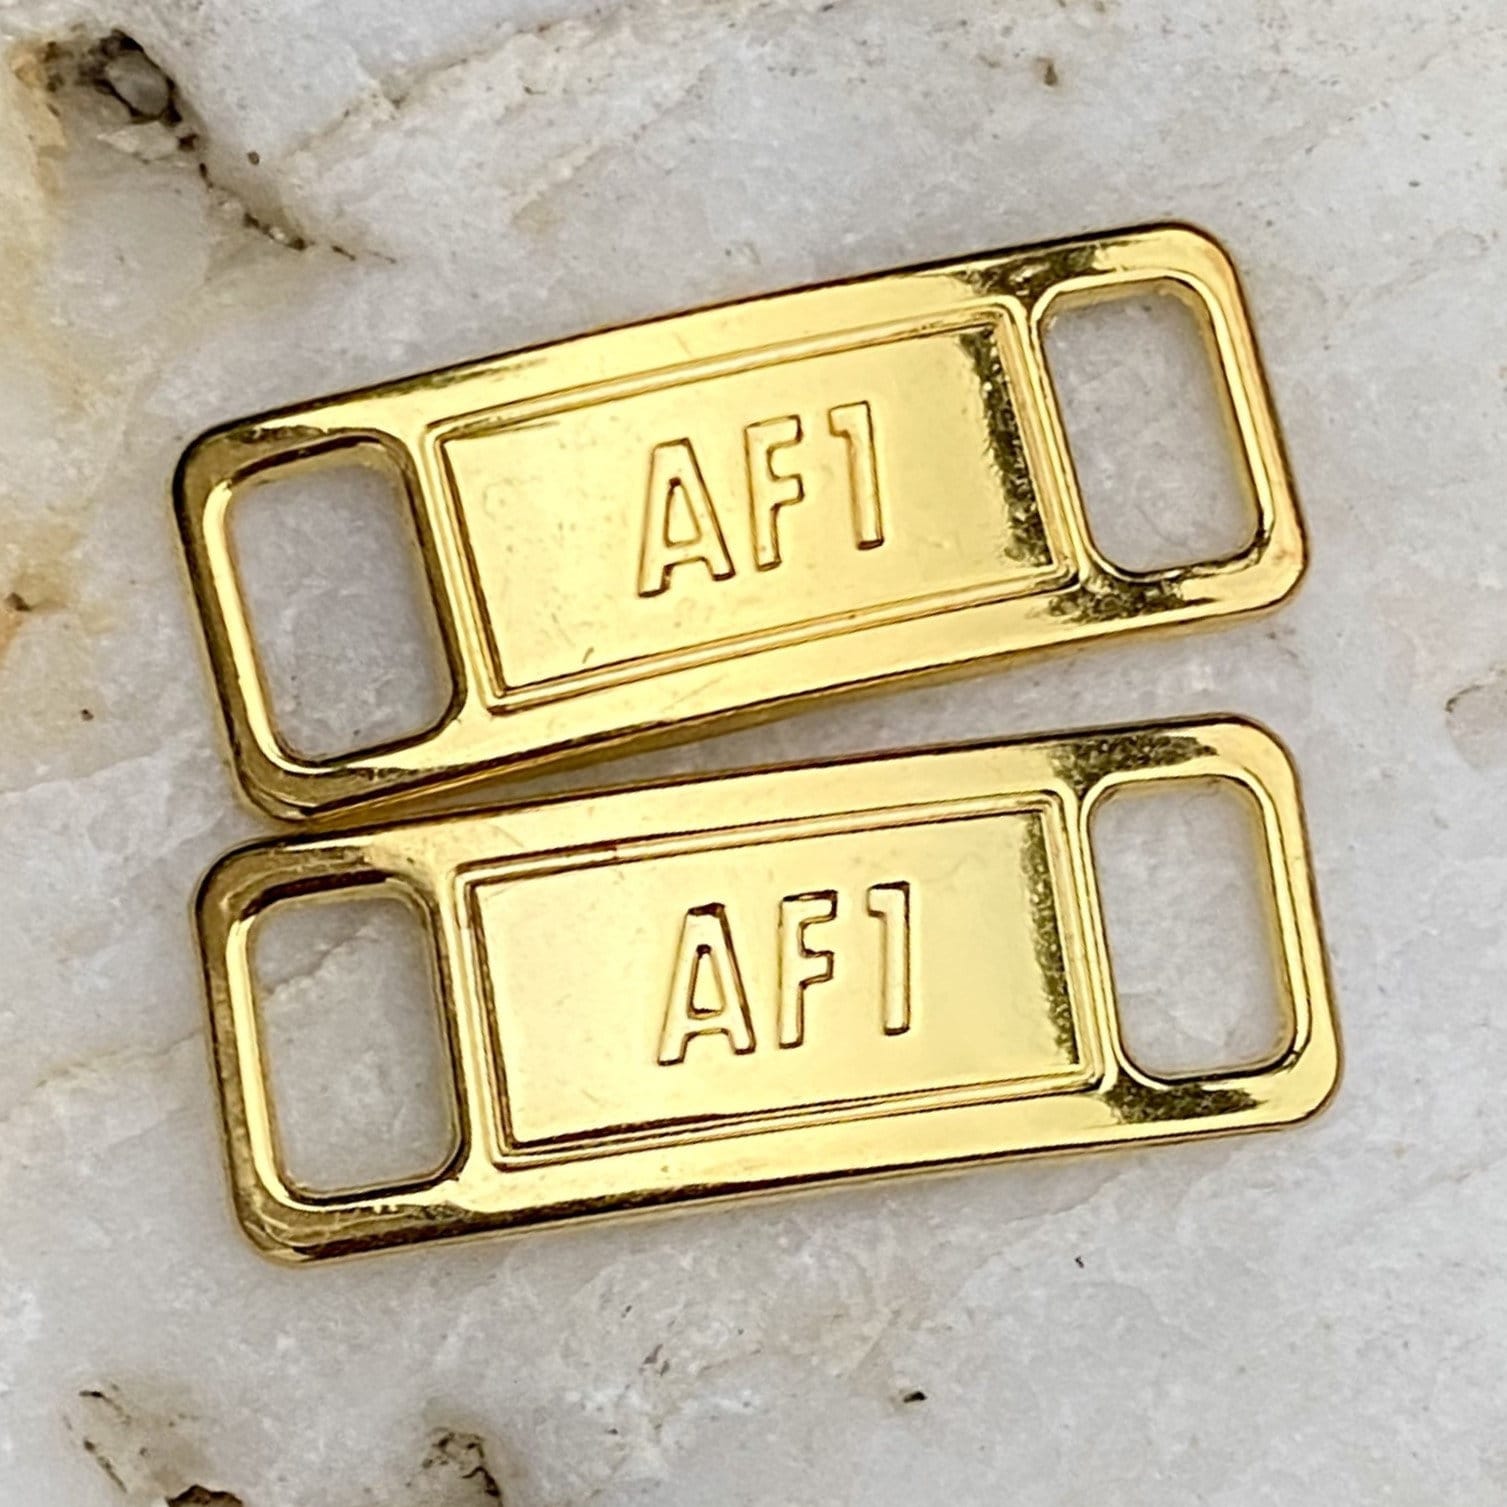 Nike AF1 Airforce 1 Air Force Laces Locks Lace tags Badge Dubraes